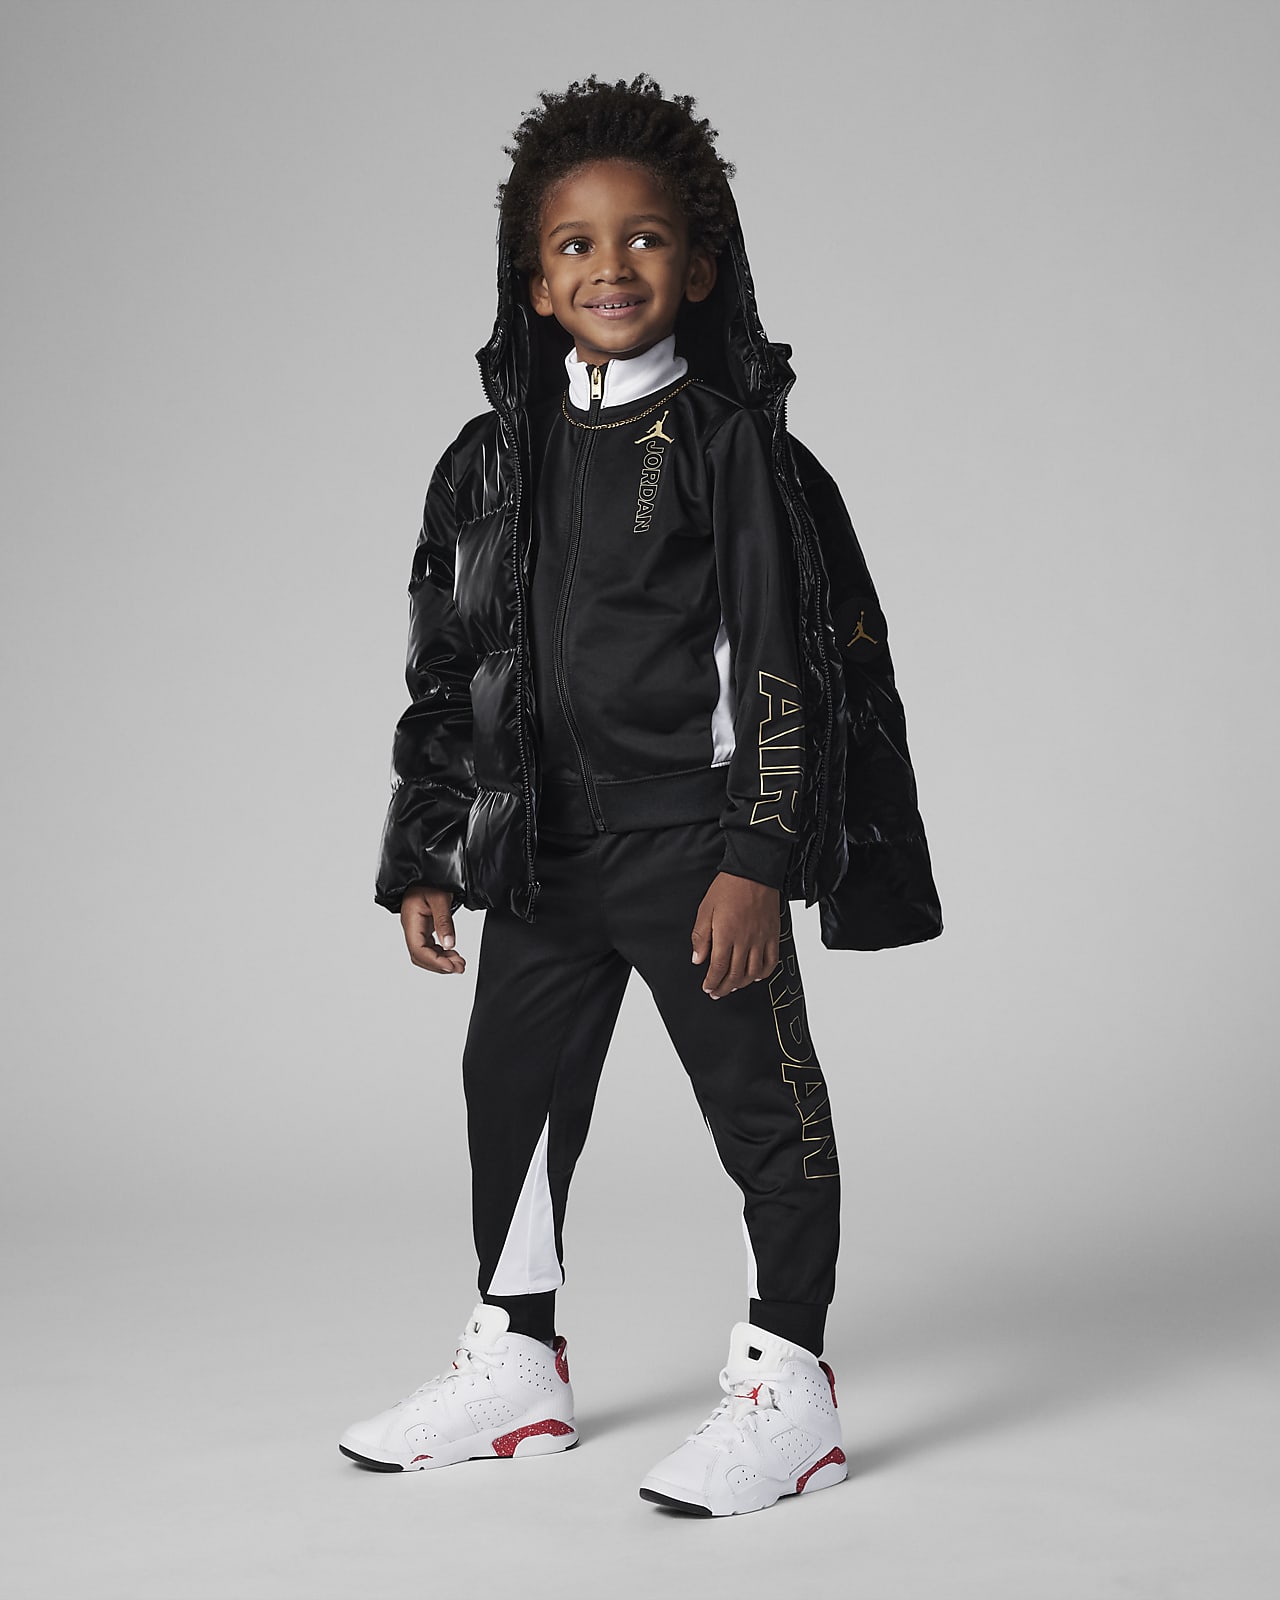 Custodio sonido Fanático Jordan Holiday Shine Tricot Set Chándal - Infantil. Nike ES